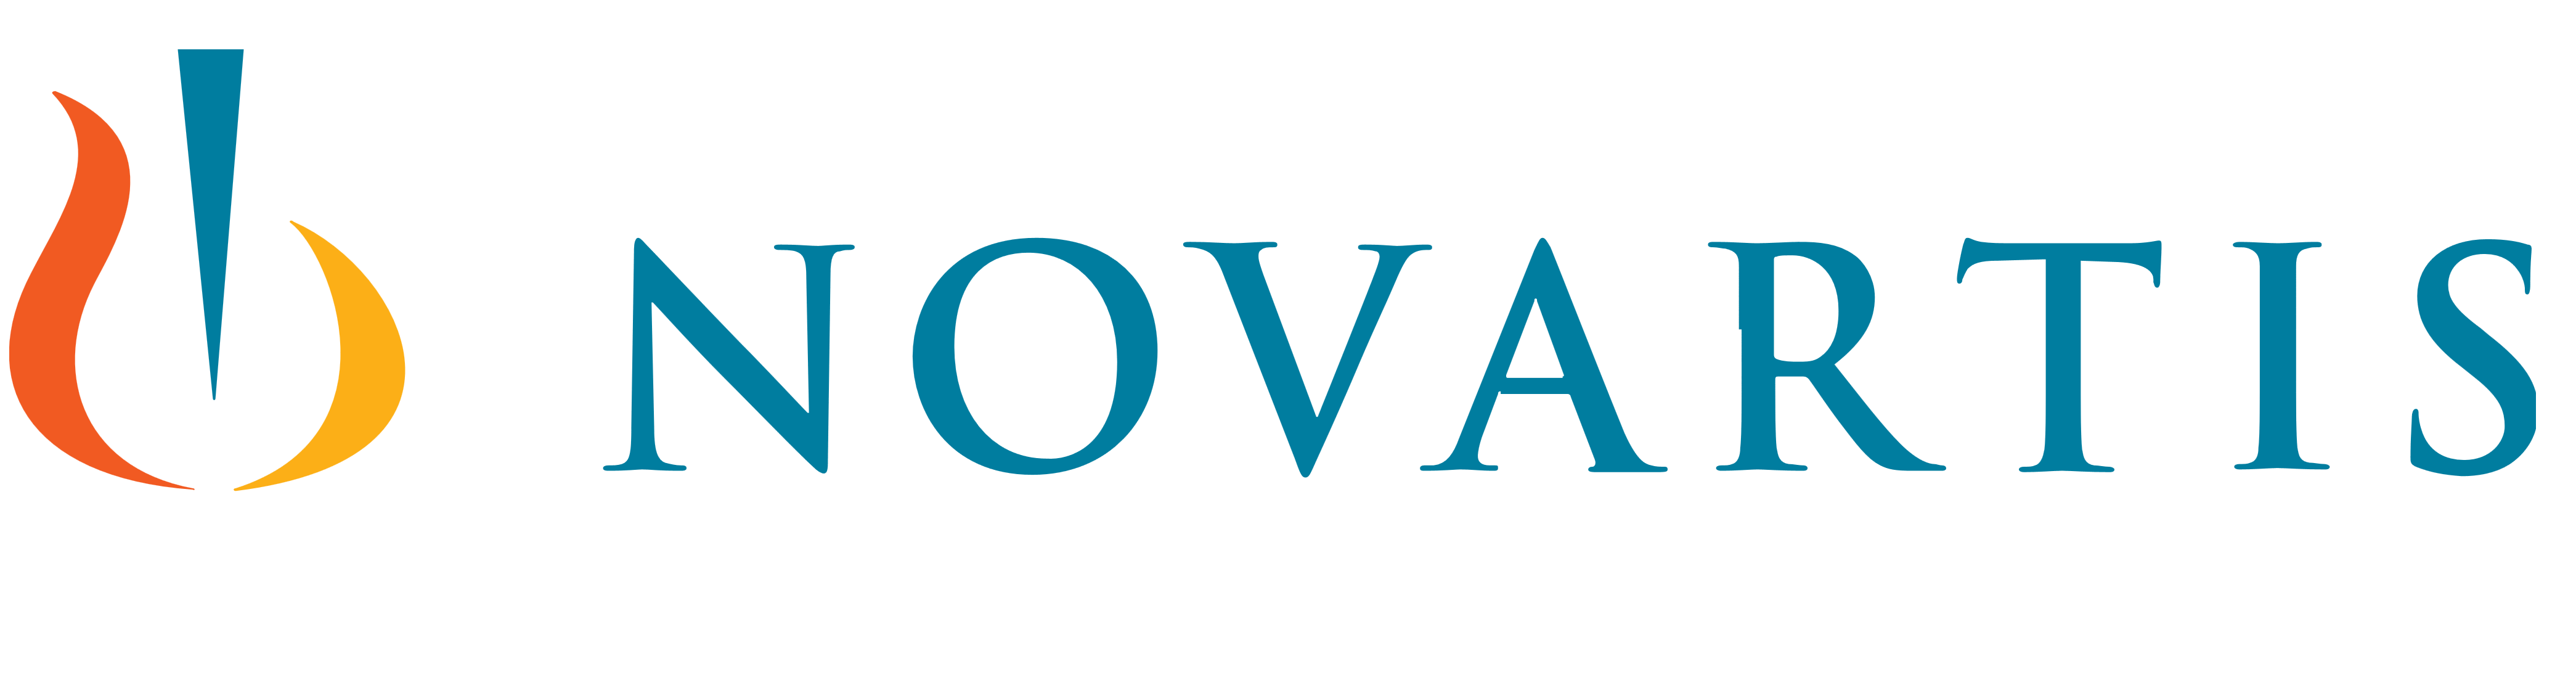 Novartis logo, logotype